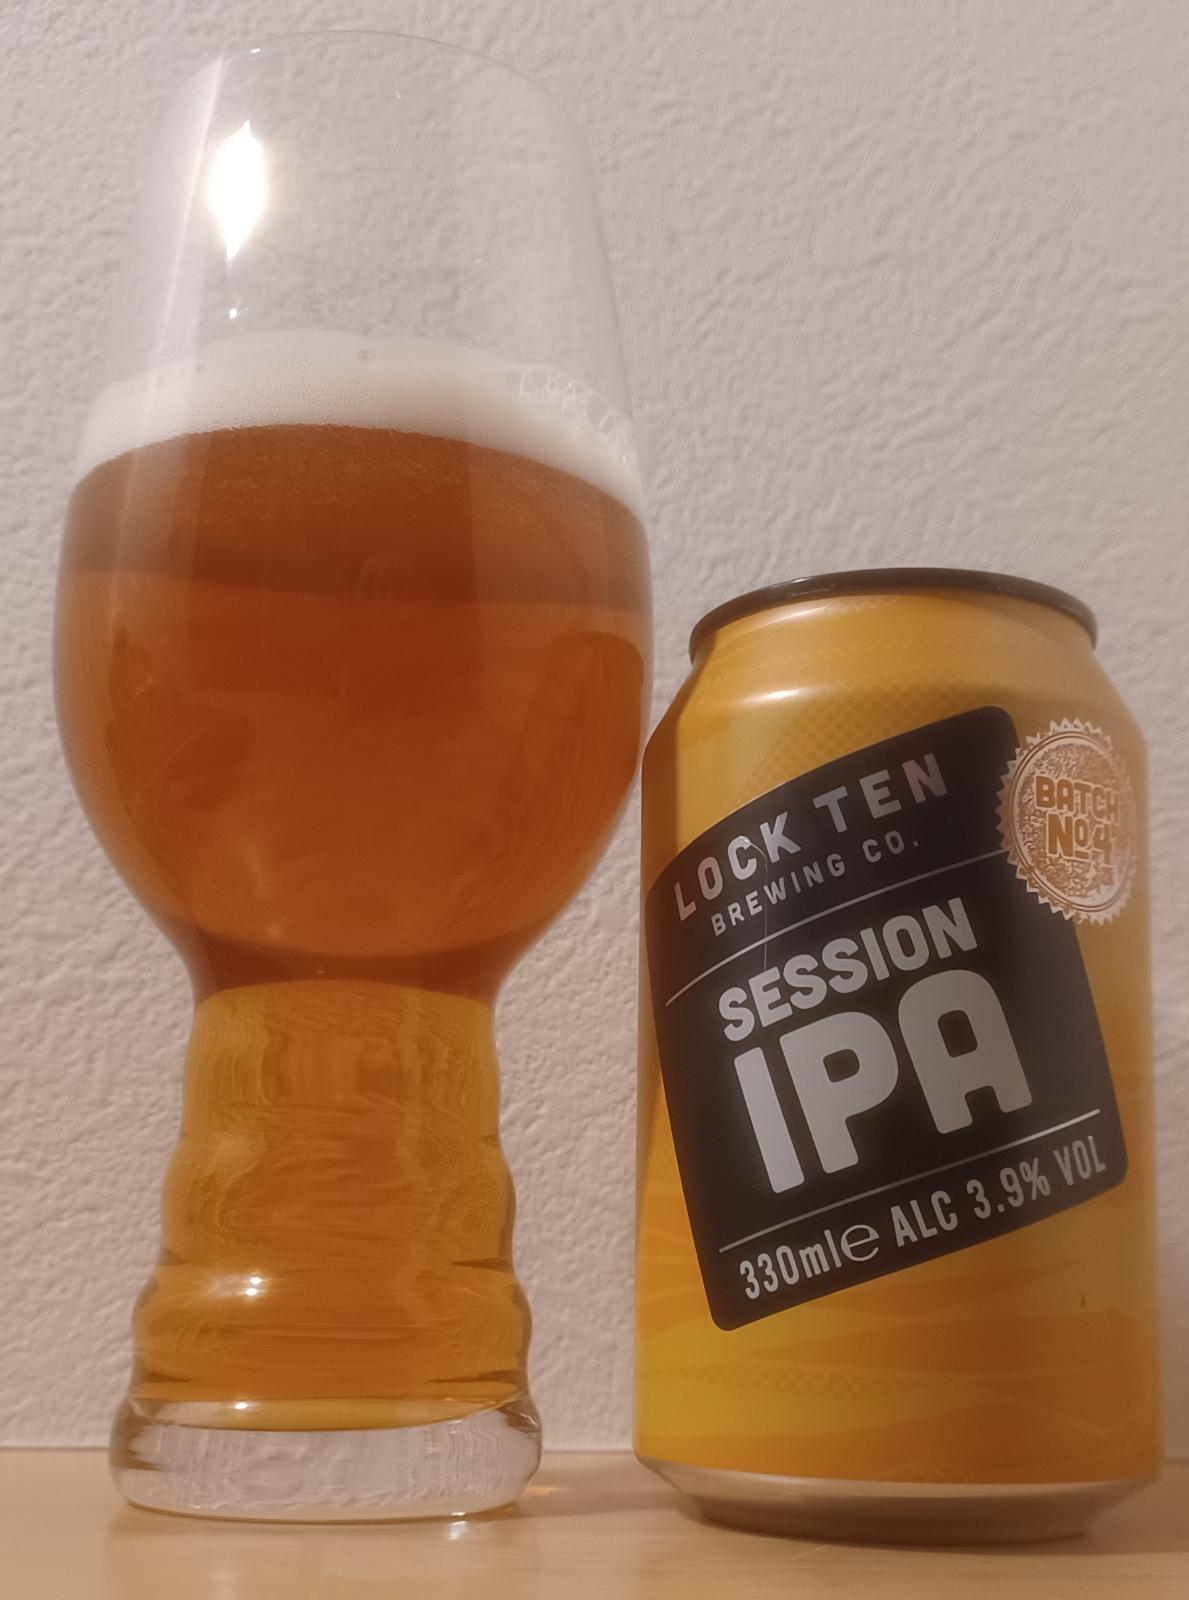 Lock Ten: Session IPA